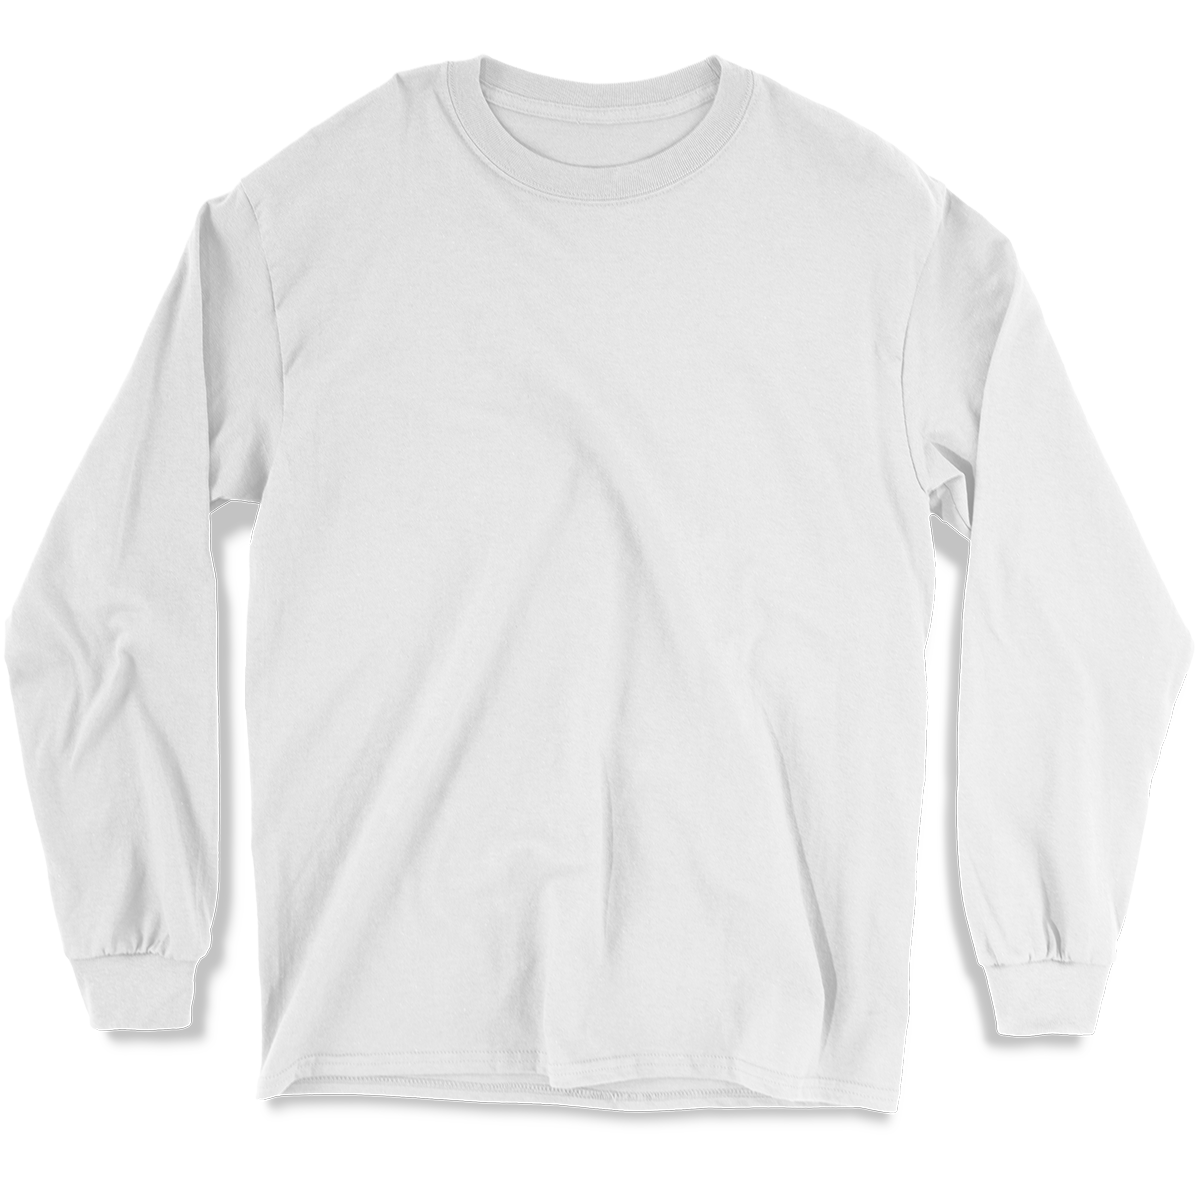 USA Made Long Sleeve T-Shirt